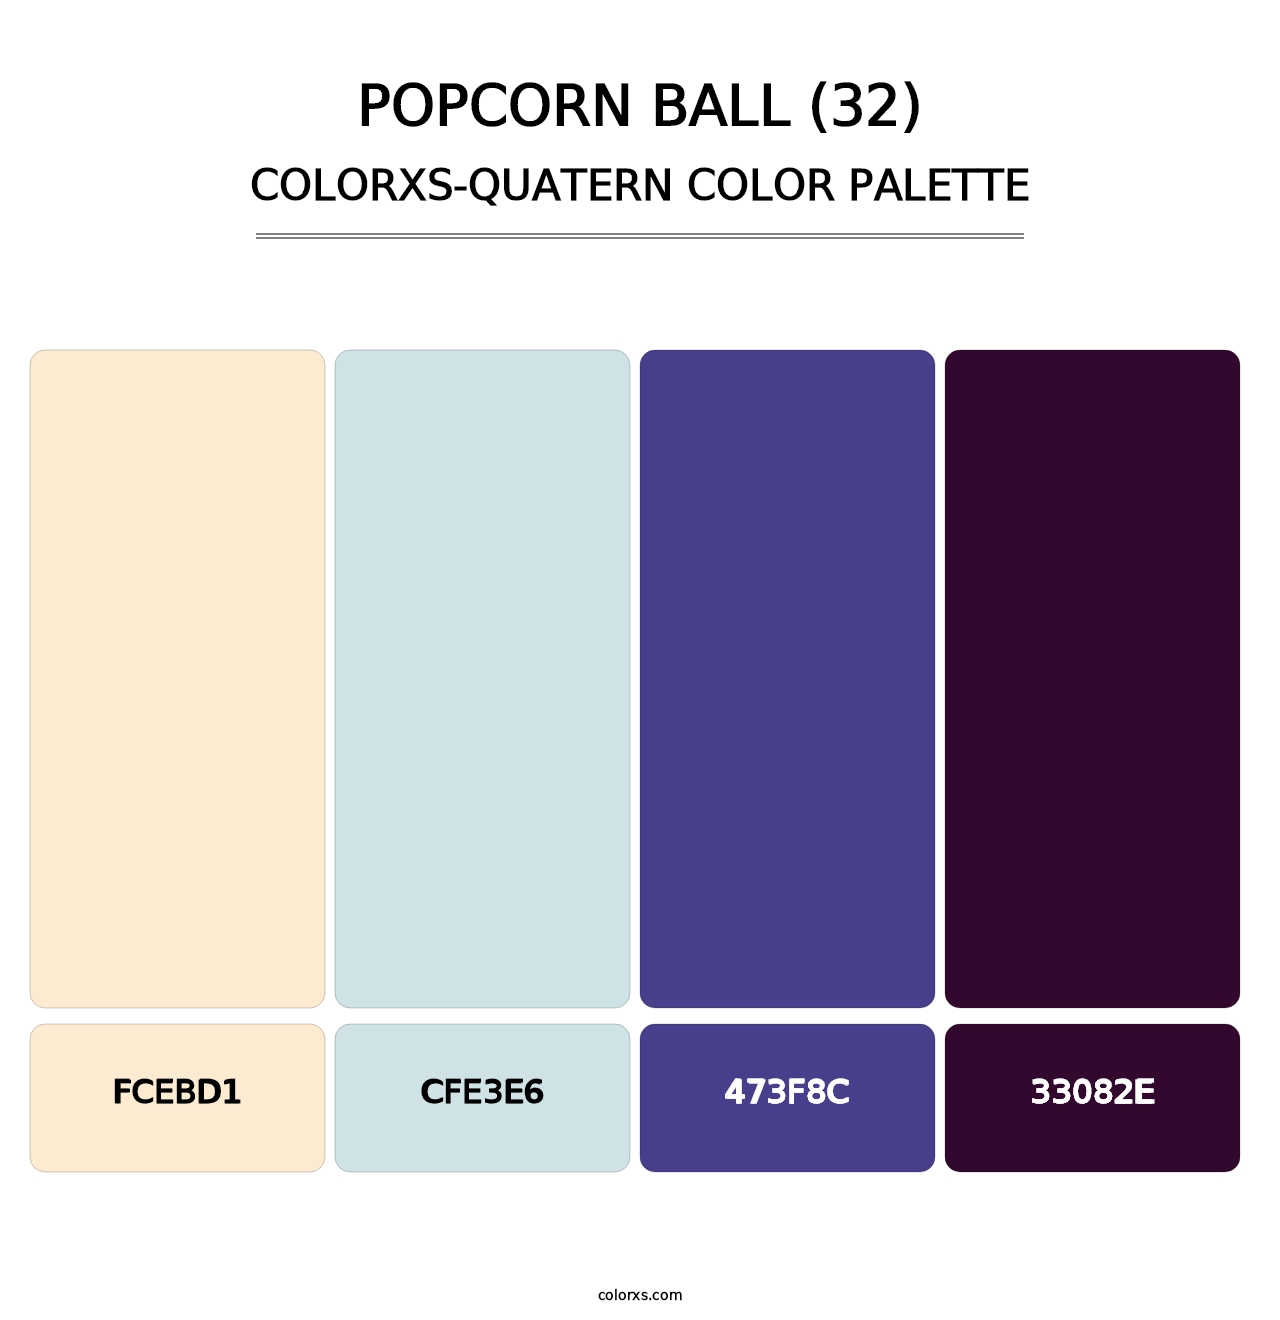 Popcorn Ball (32) - Colorxs Quatern Palette